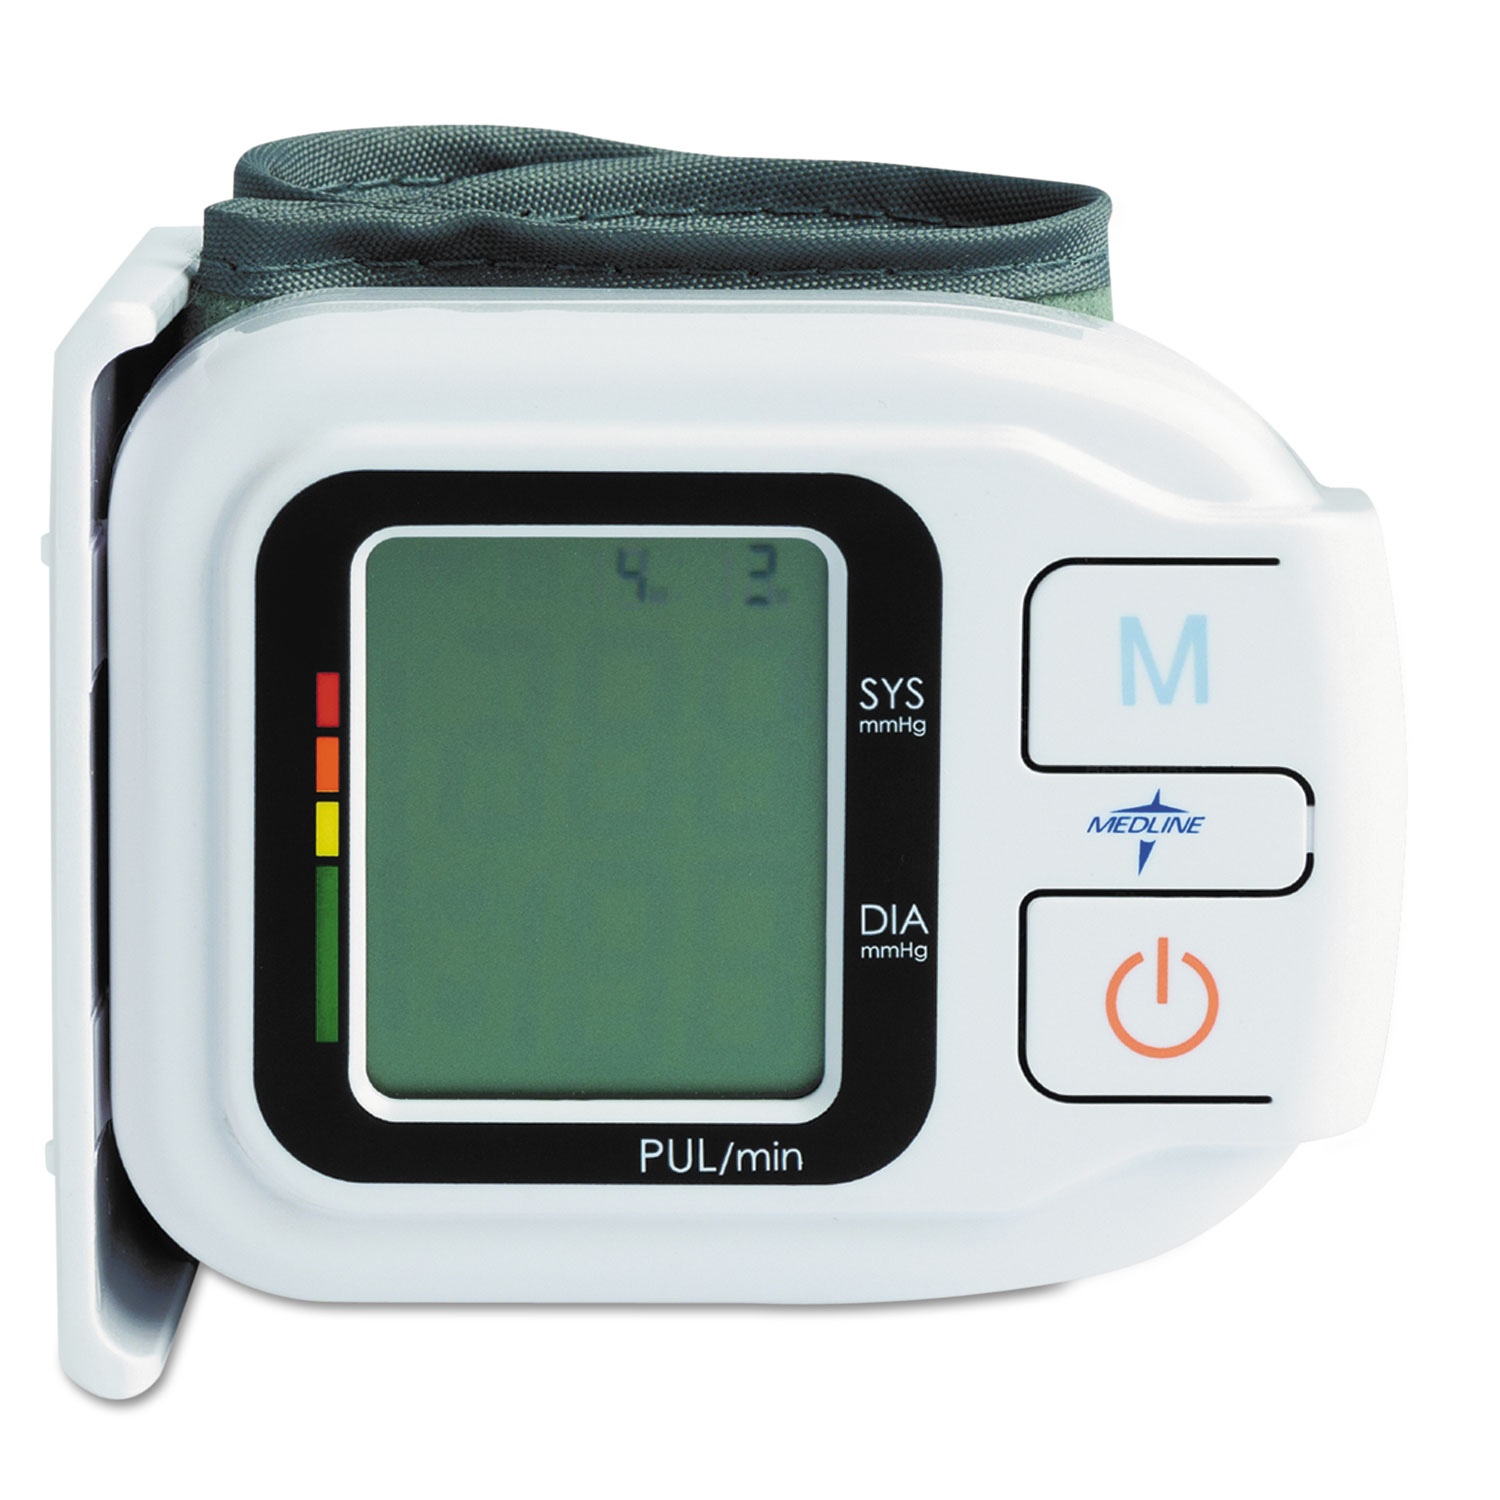  Medline MDS3003 Automatic Digital Wrist Blood Pressure Monitor, One Size Fits All (MIIMDS3003) 